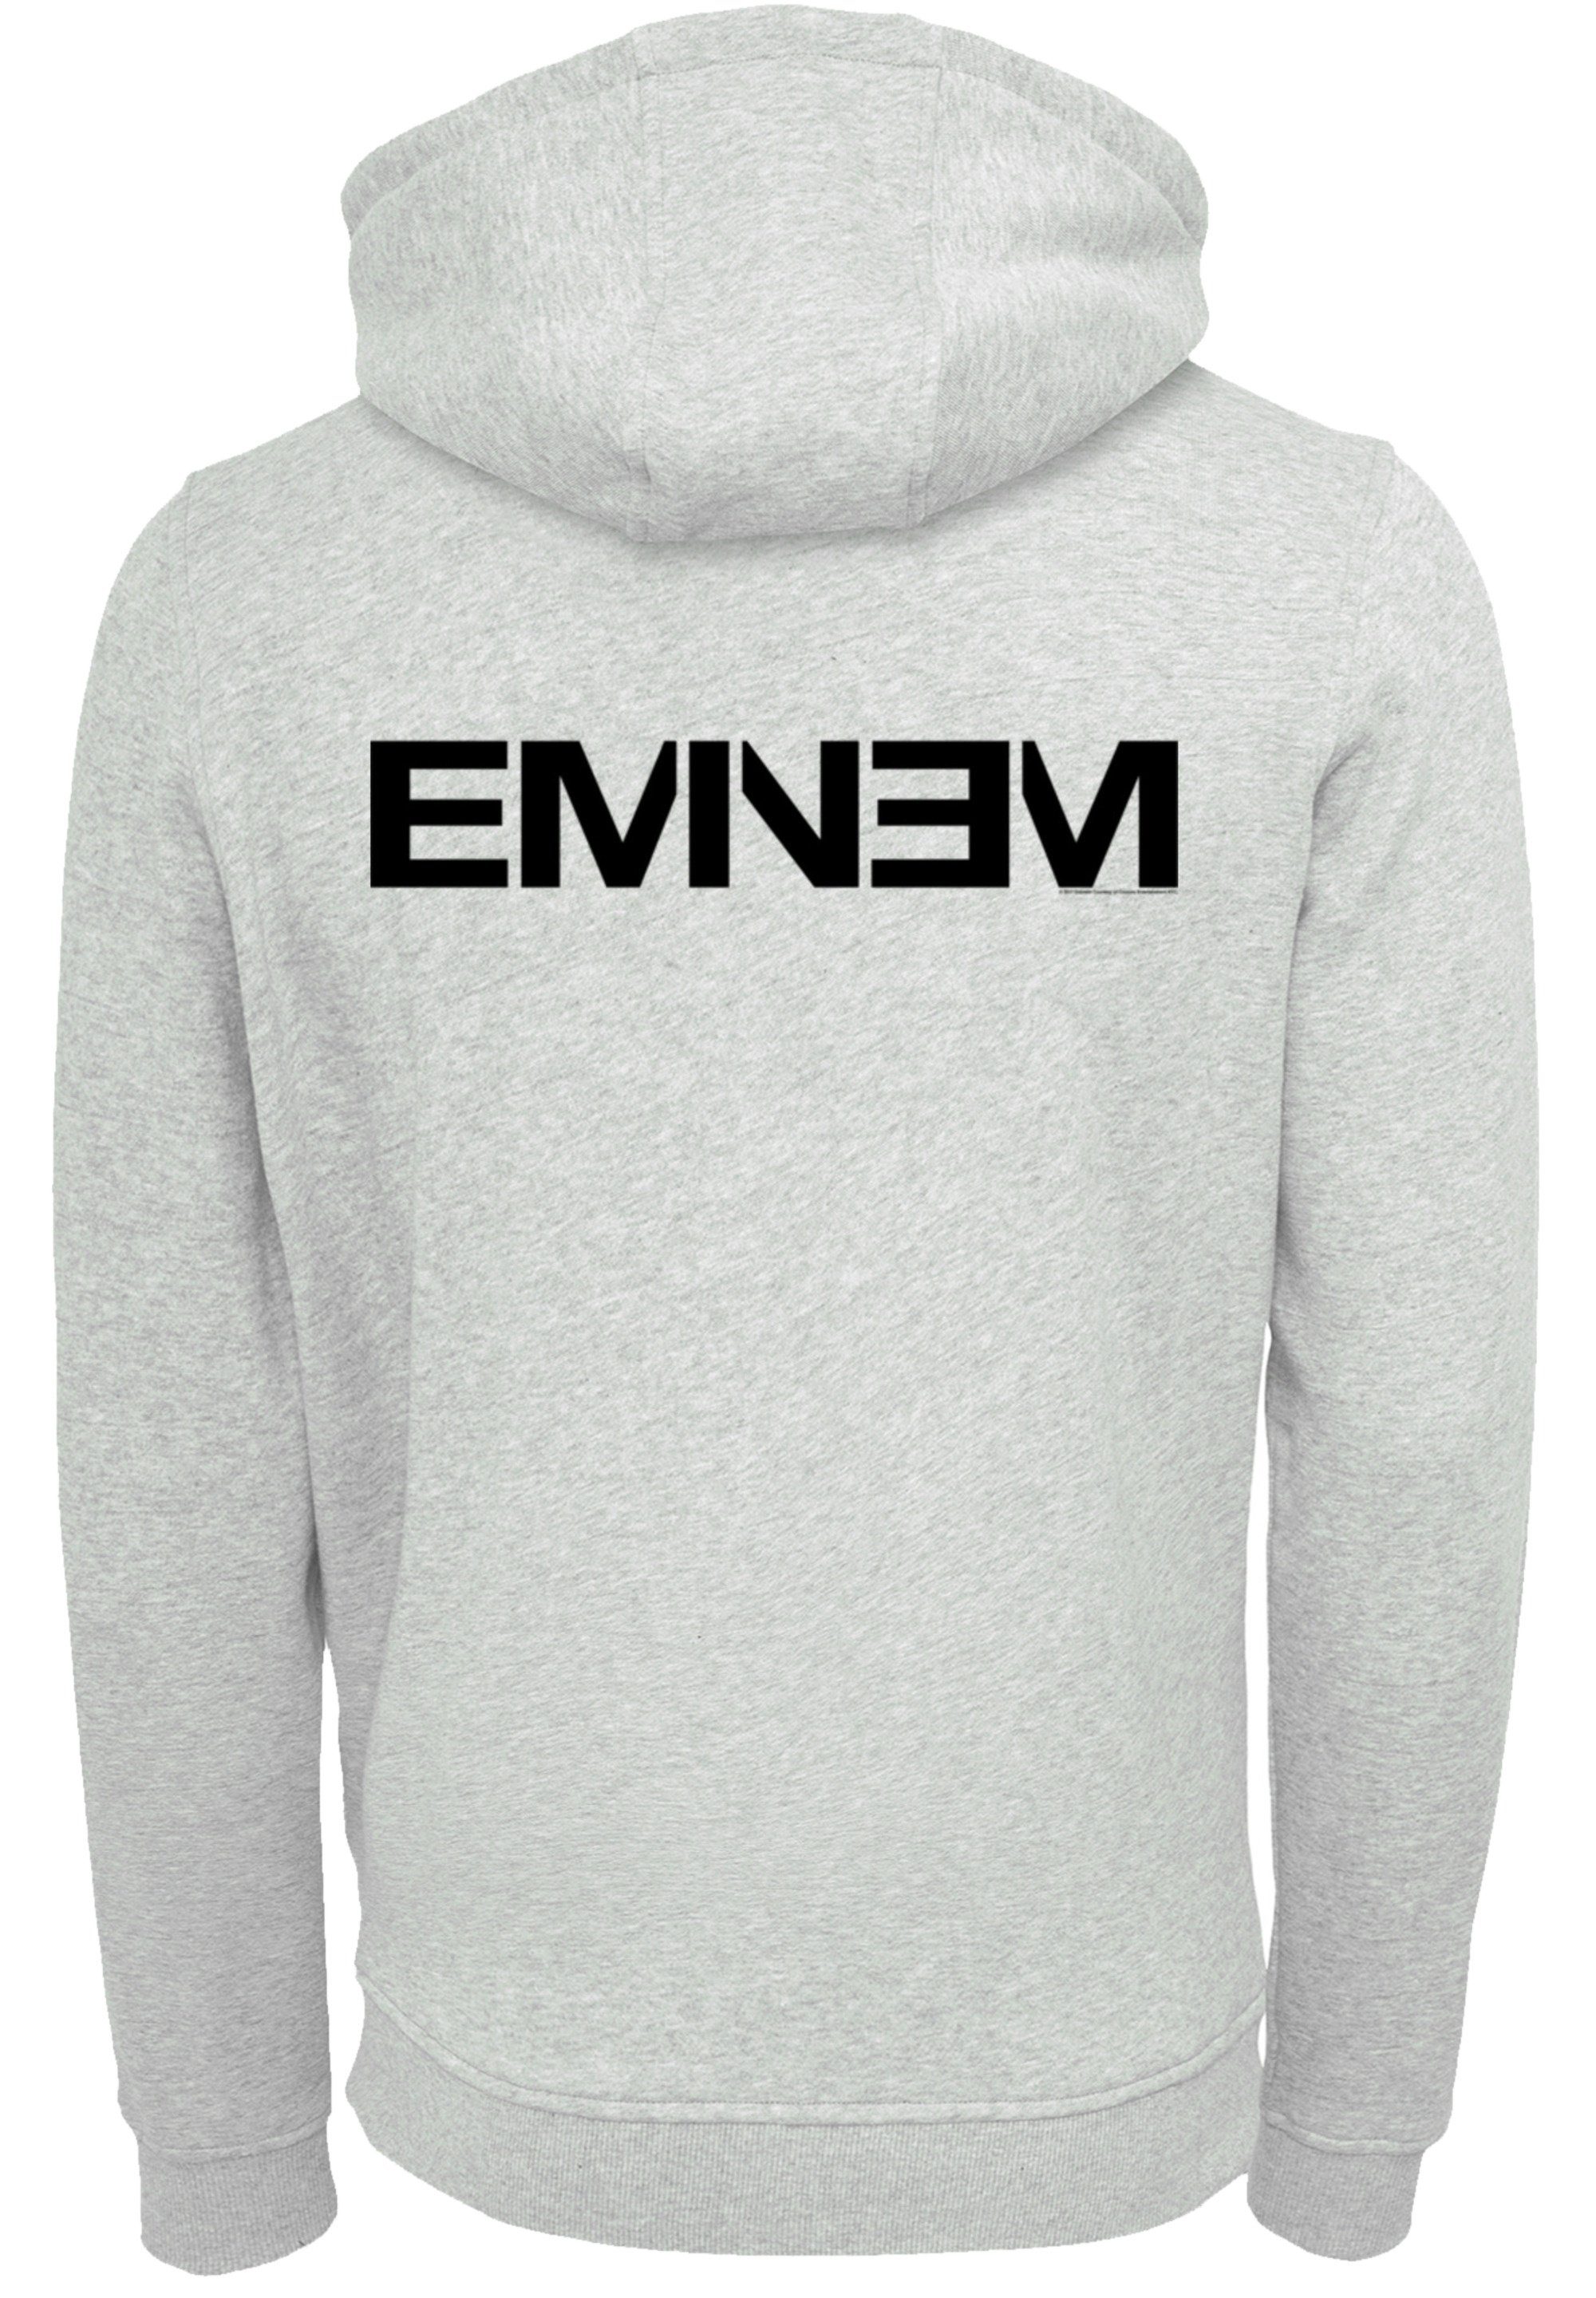 Premium Hoodie Qualität, F4NT4STIC Band, grey Logo Eminem heather Music Rap